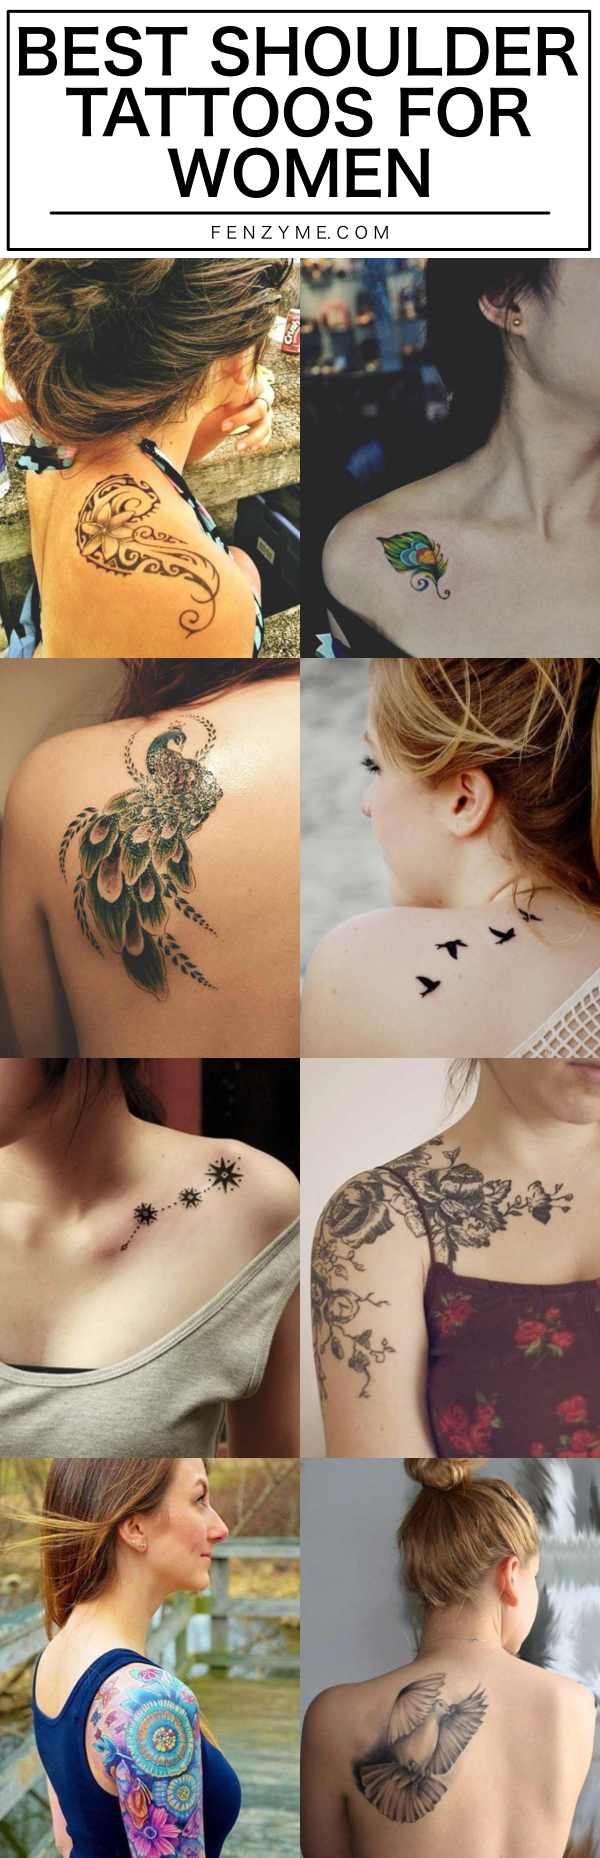 60 Best Shoulder Tattoos for Women in 2017